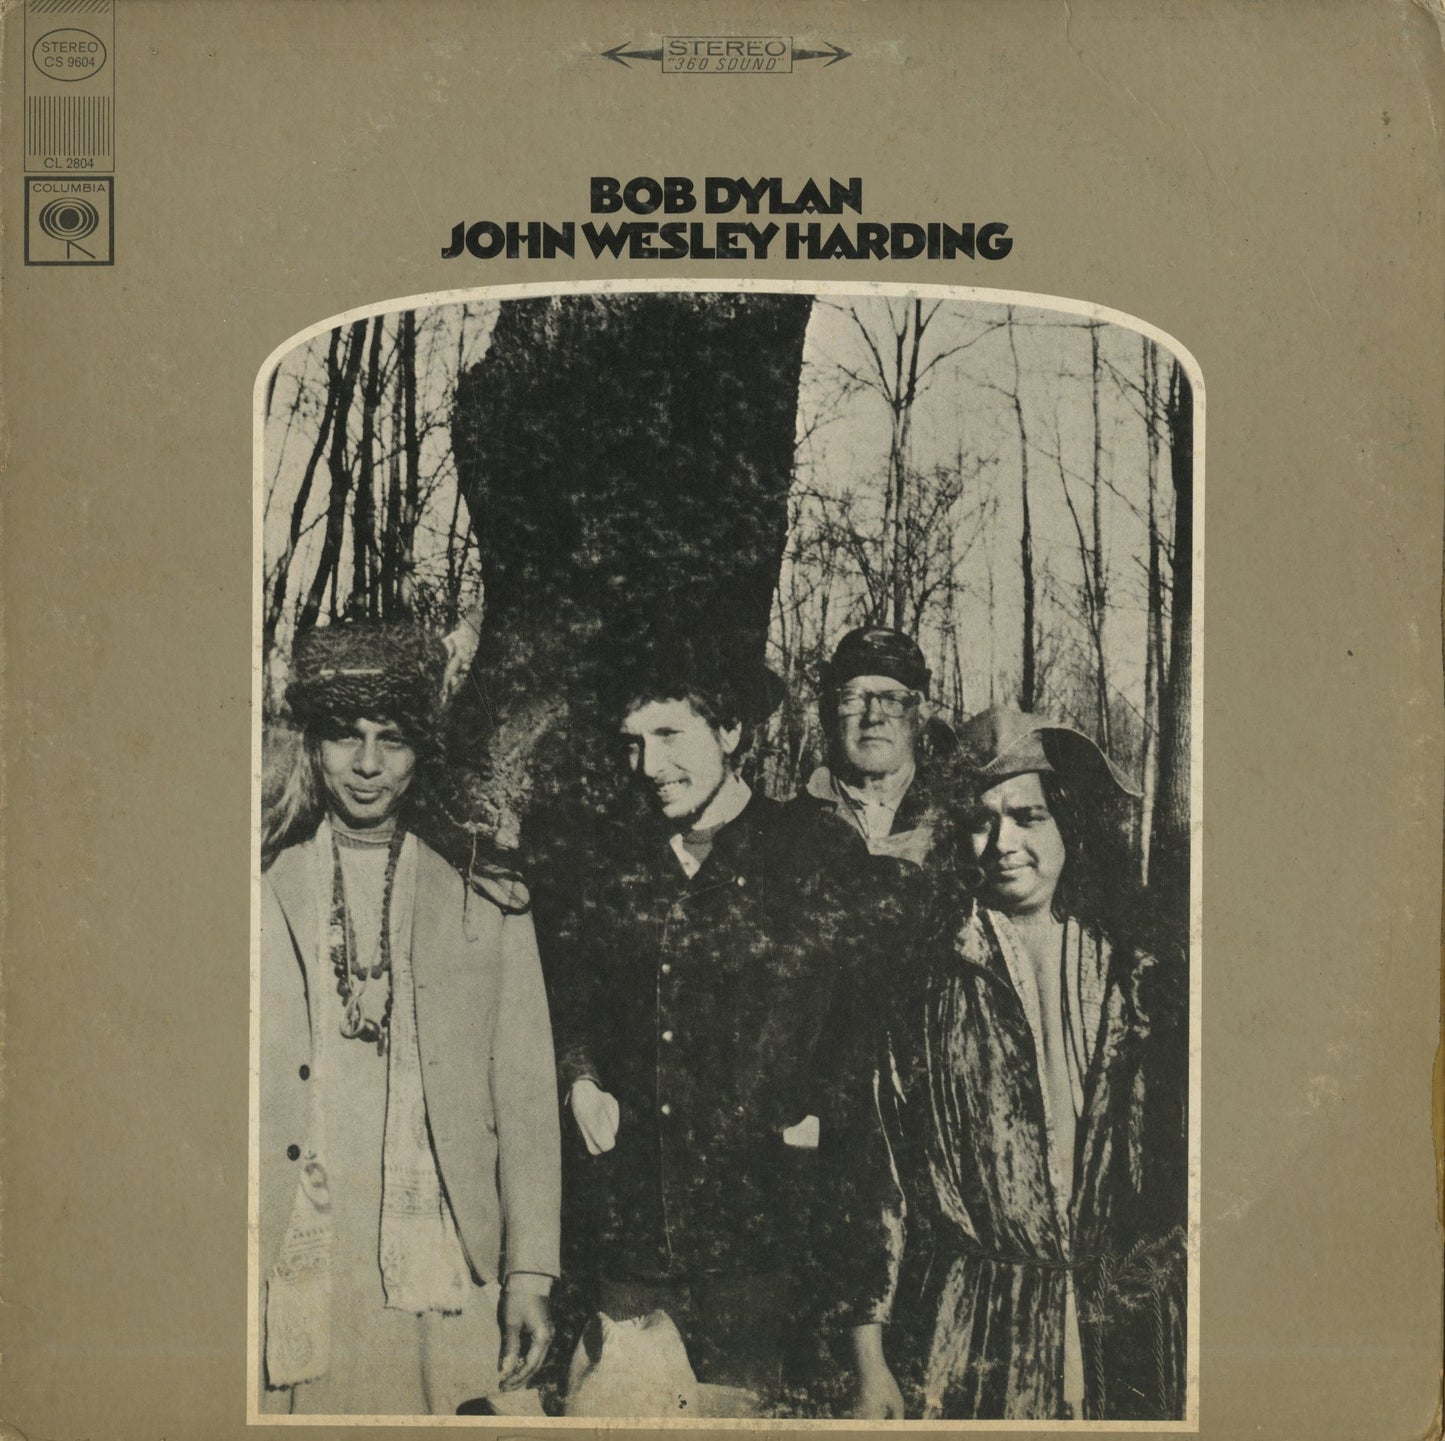 Bob Dylan / ボブ・ディラン / John Wesley Harding (CS 9604)